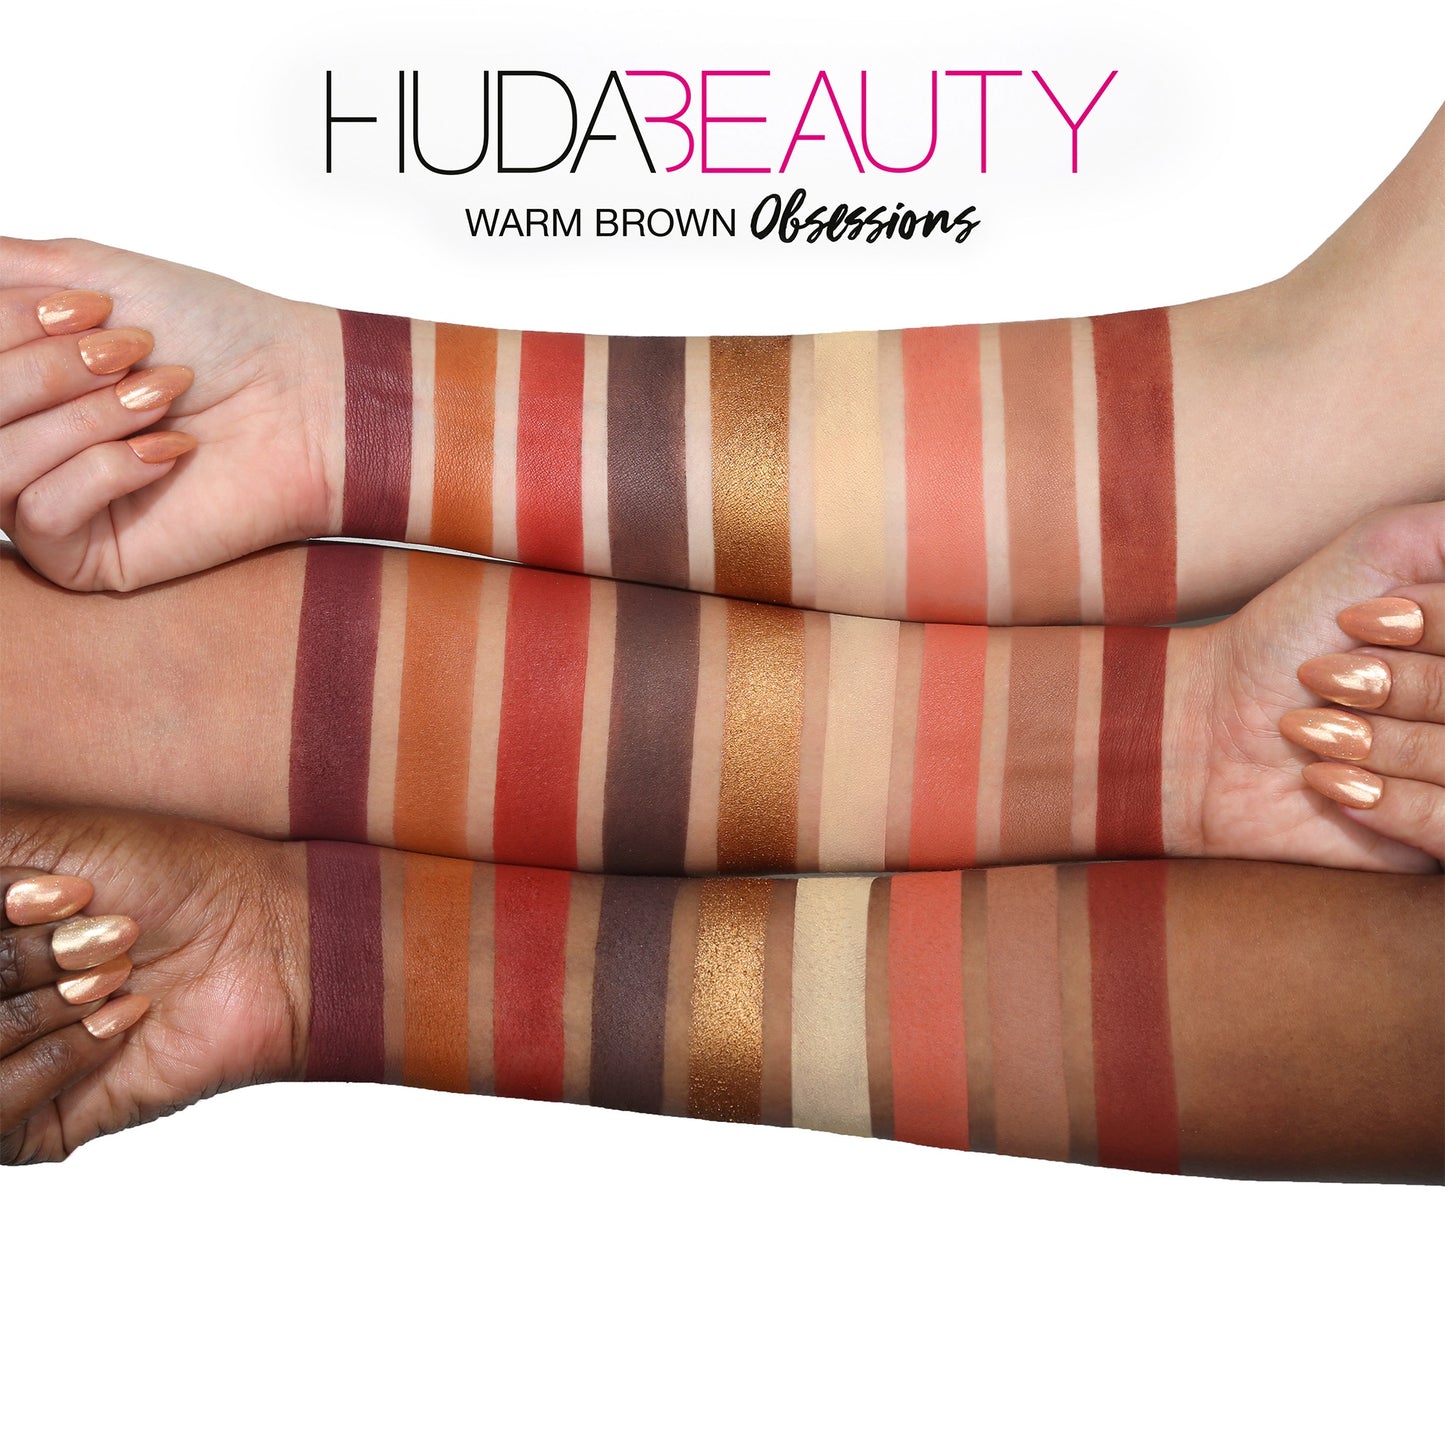 Huda Beauty warm brown obsessions eyeshadow palette